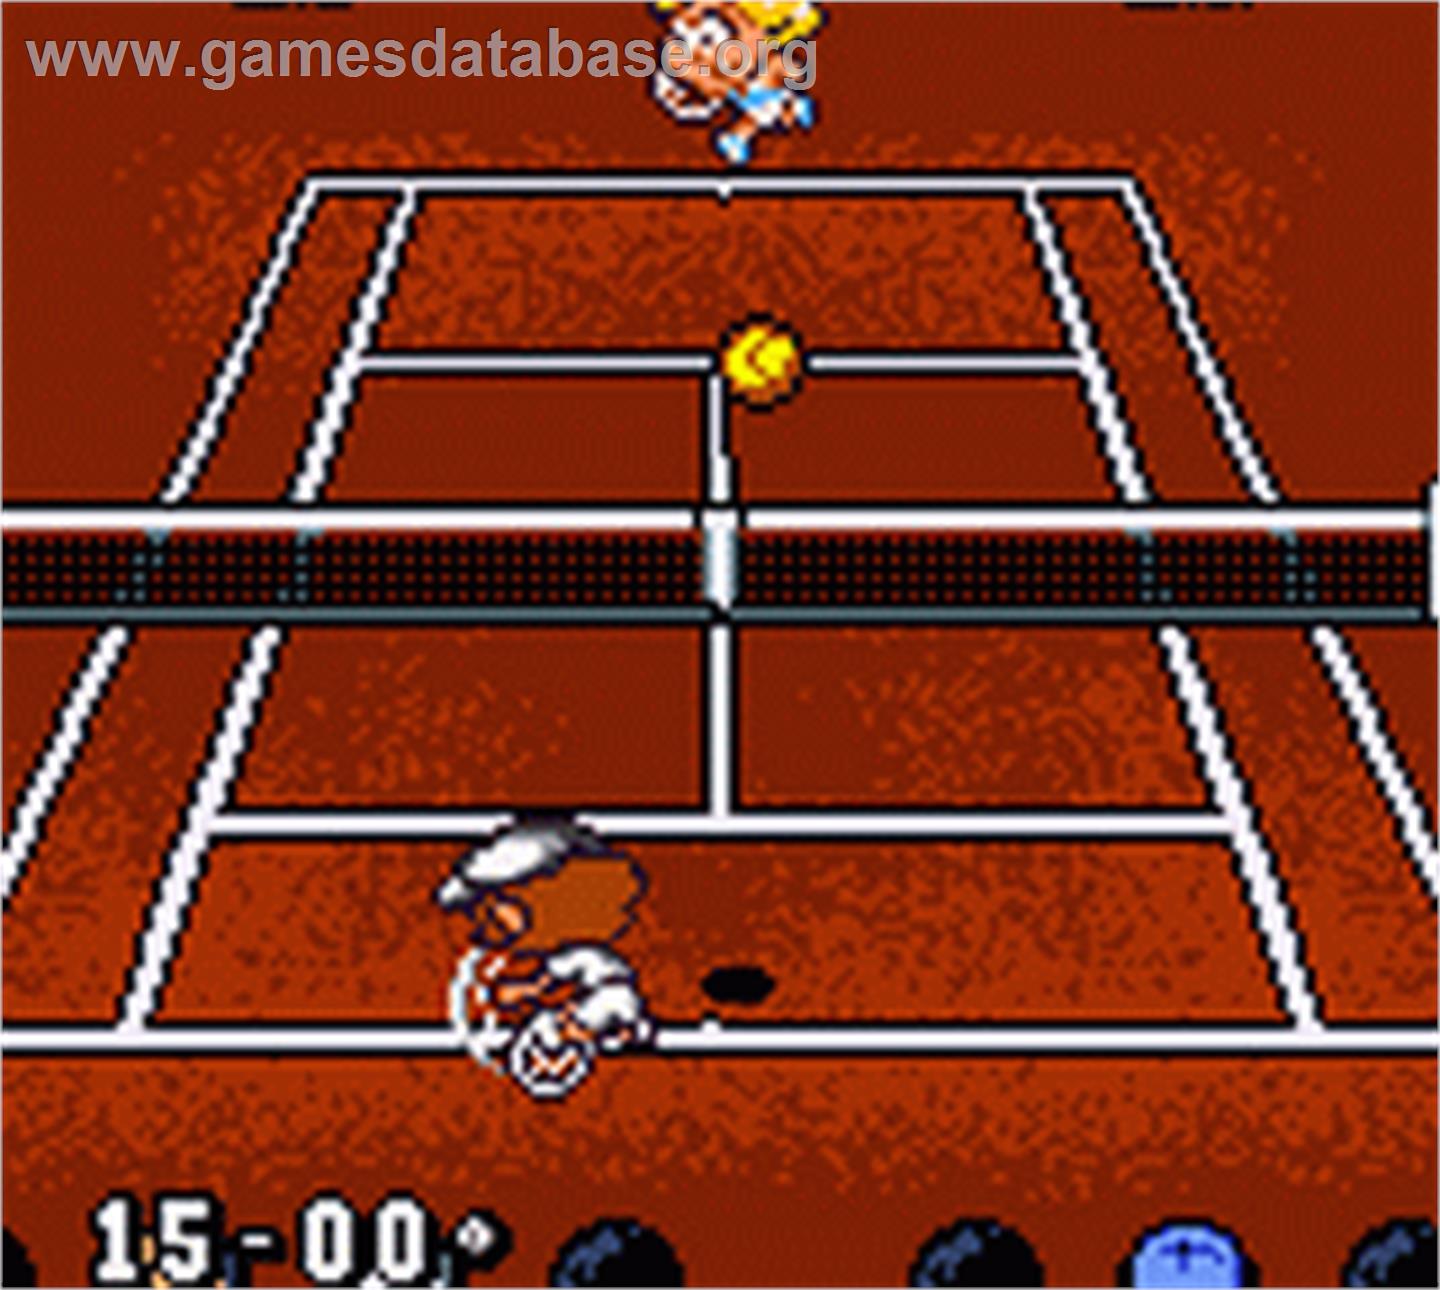 Roland Garros French Open 2000 - Nintendo Game Boy Color - Artwork - In Game